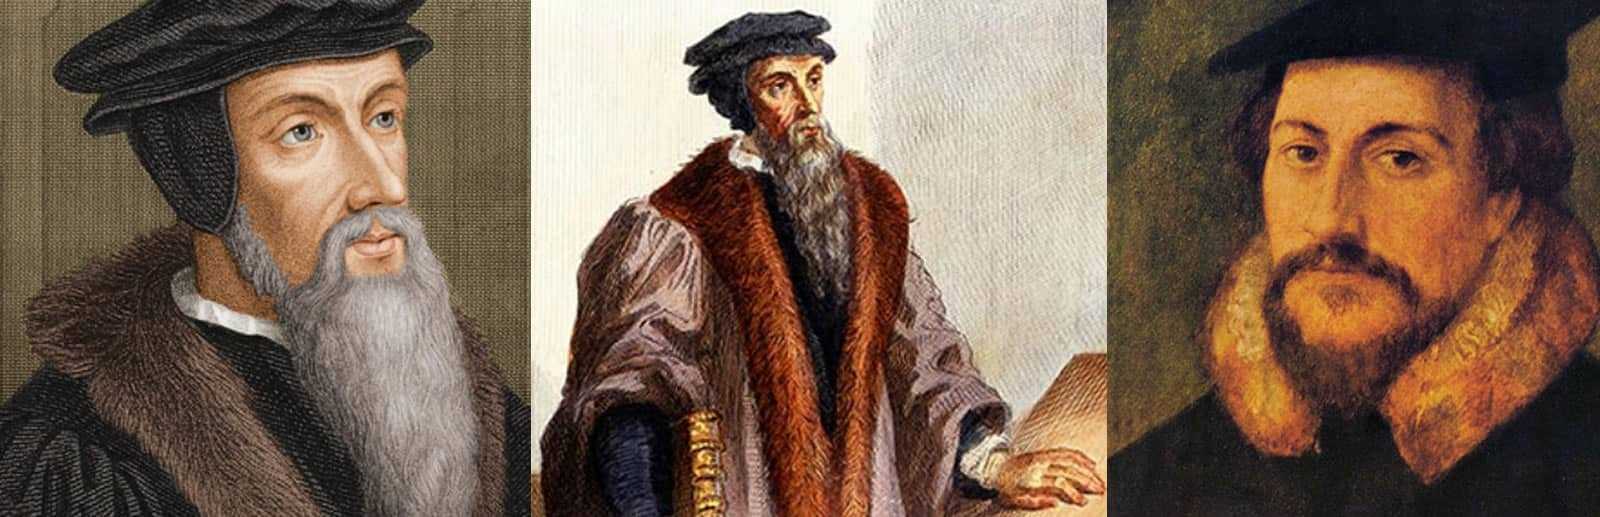 God's General John Calvin